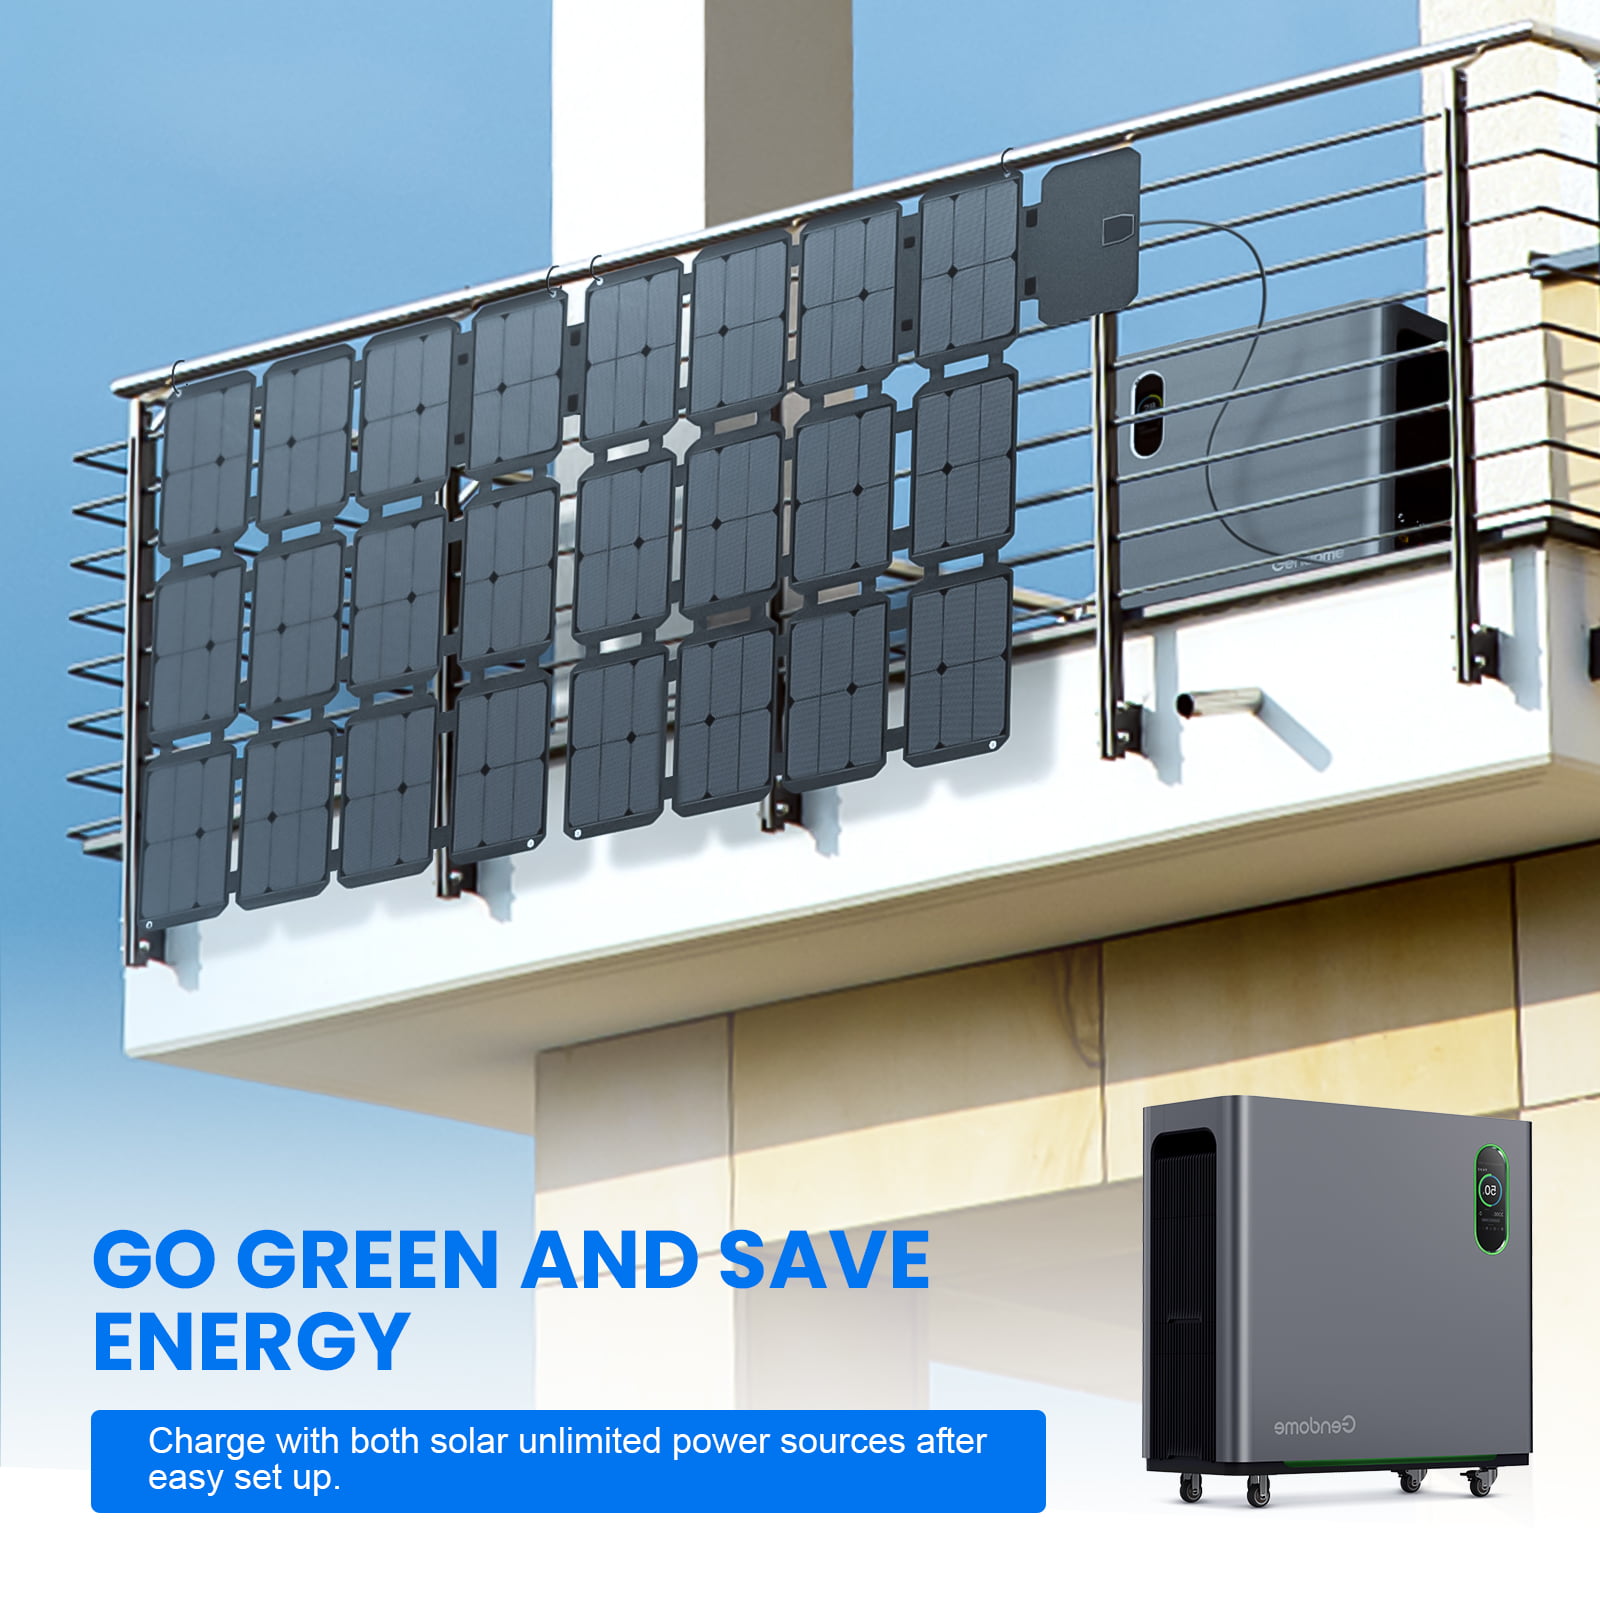 Gendome Home 3000 Solar Portable Power Station 3072Wh and 3000W – Borikensm